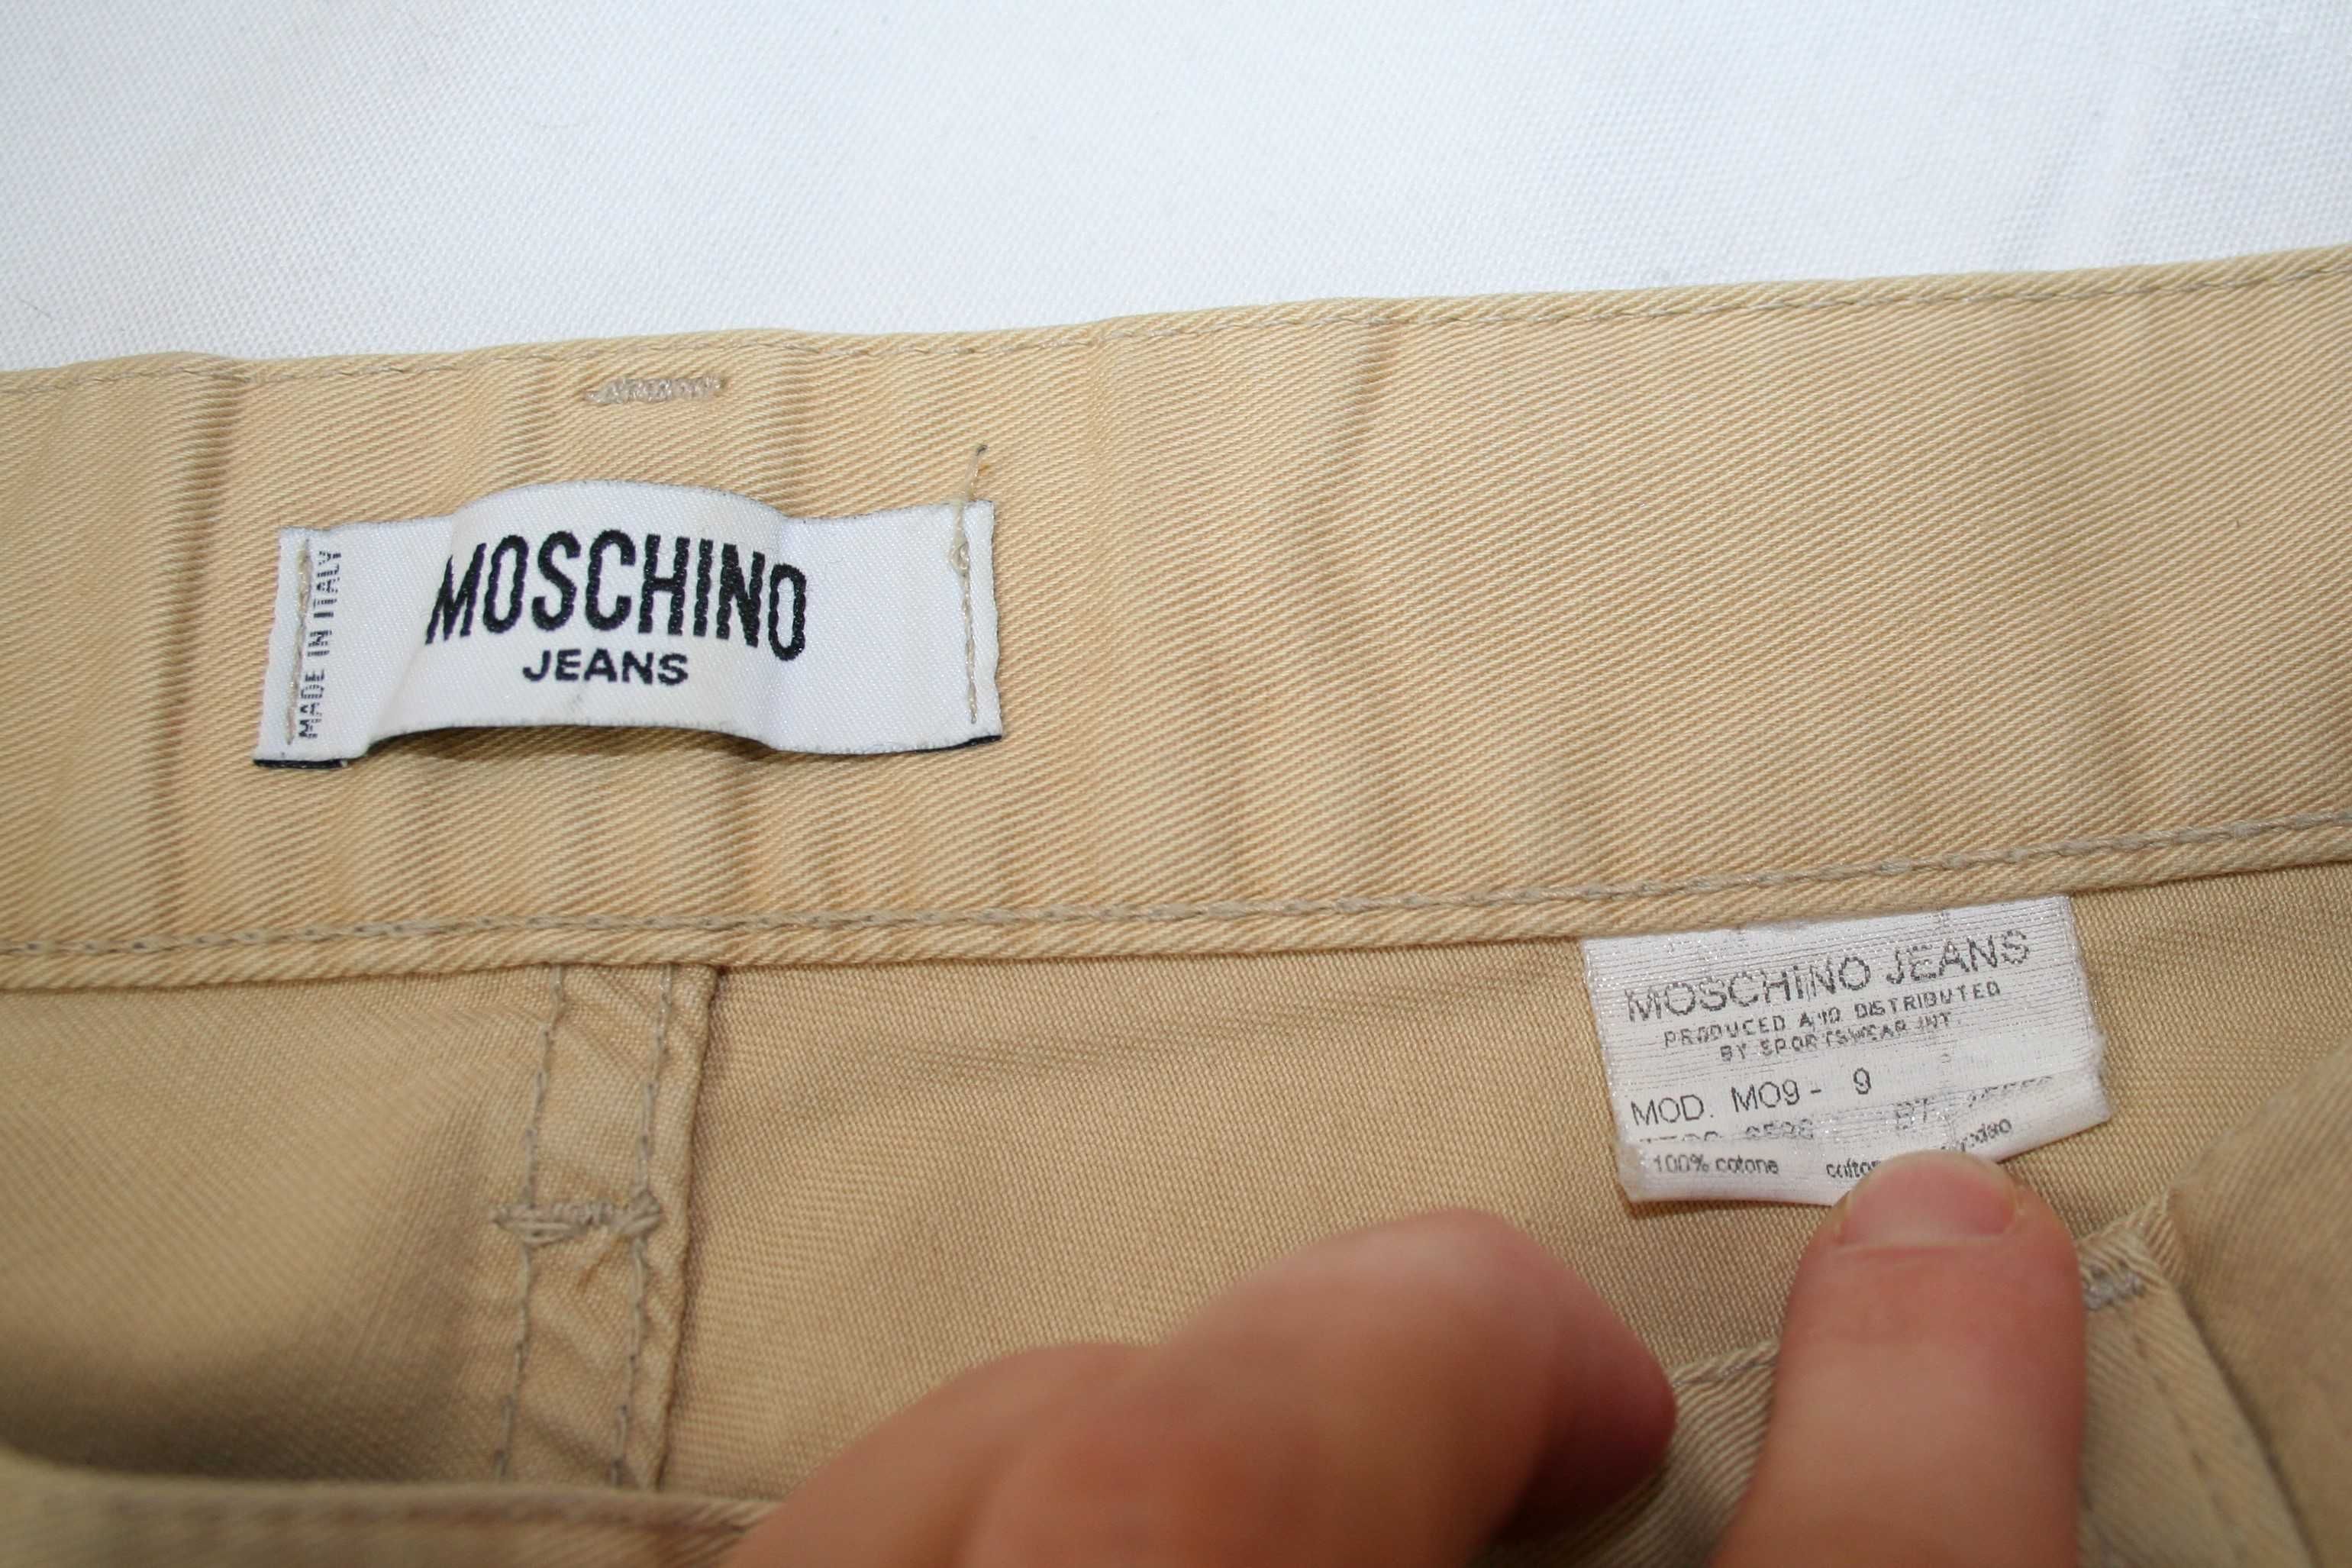 Moschino Jeans Spodnie Rozmiar L Made in Italy Okazja! 150 zł